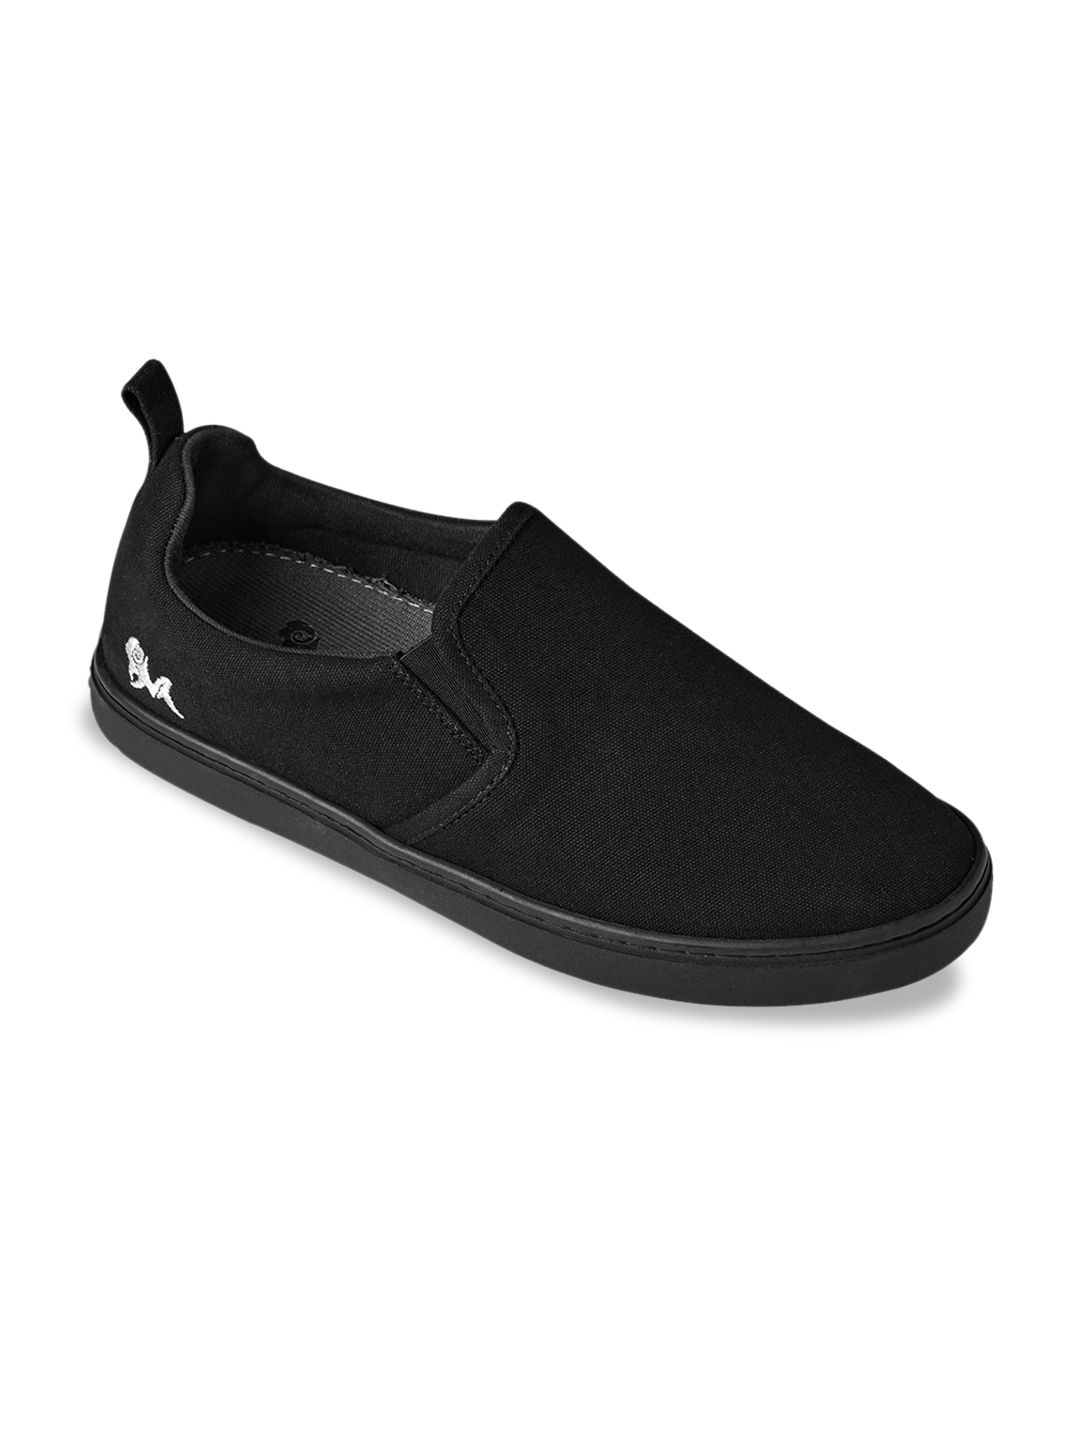 NEEMANS Unisex Black Slip-On Sneakers Price in India